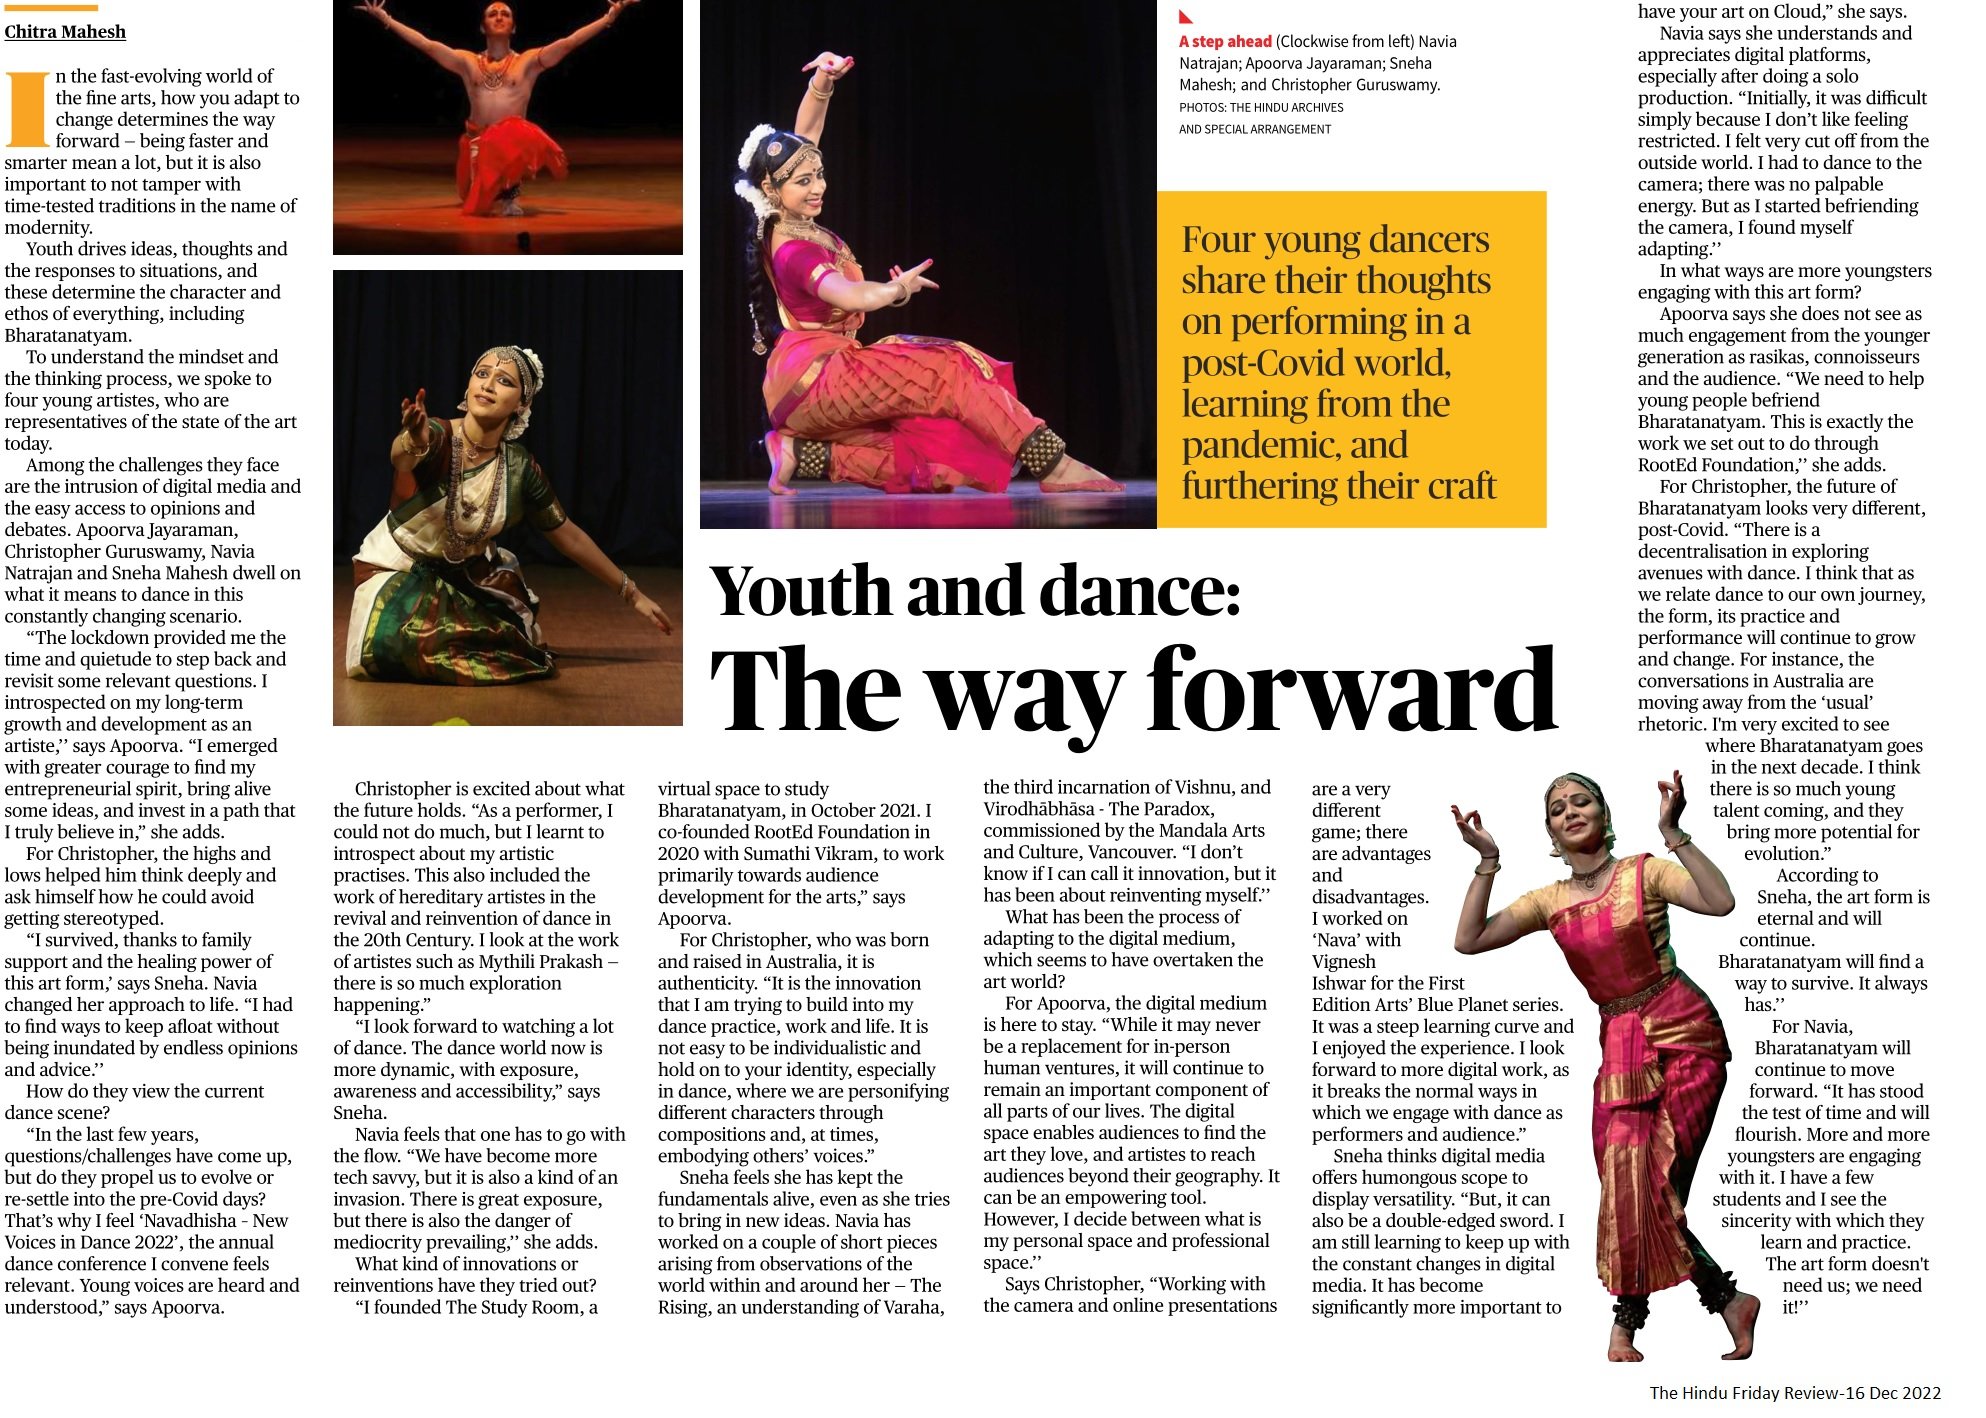 Youth and dance: The way forward - Chitra Mahesh